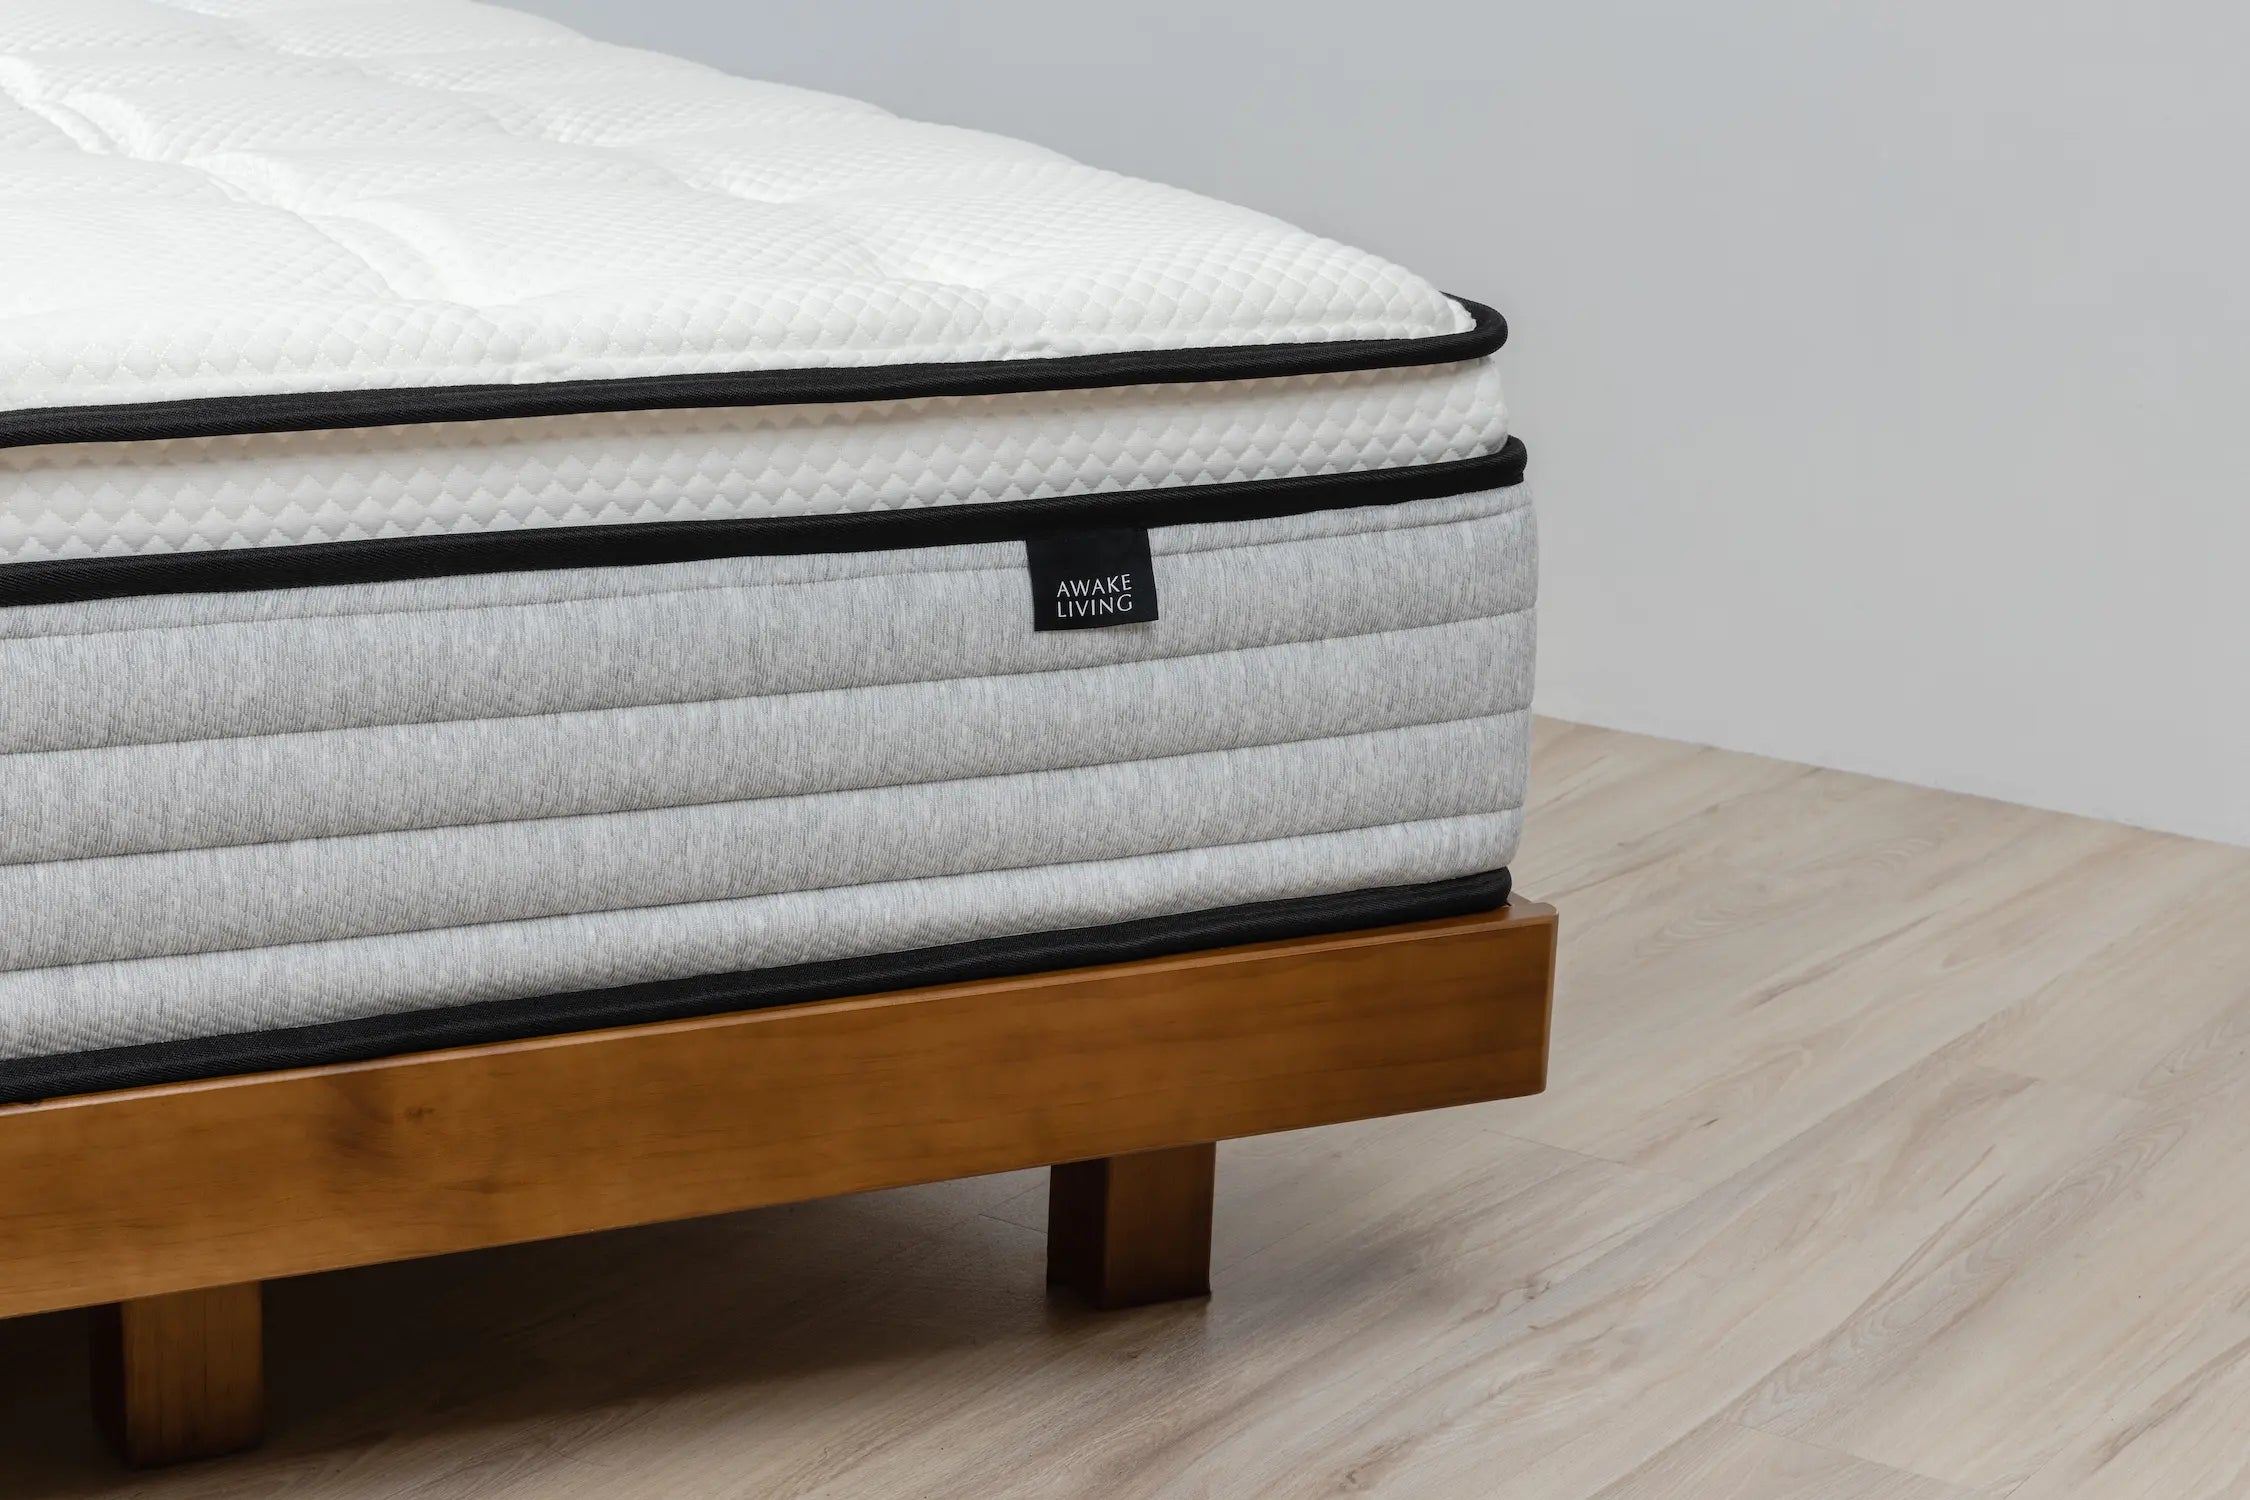  Luxury 3.0 美夢成真頂級三線鋼天絲乳膠獨立筒床墊情境照 - 3